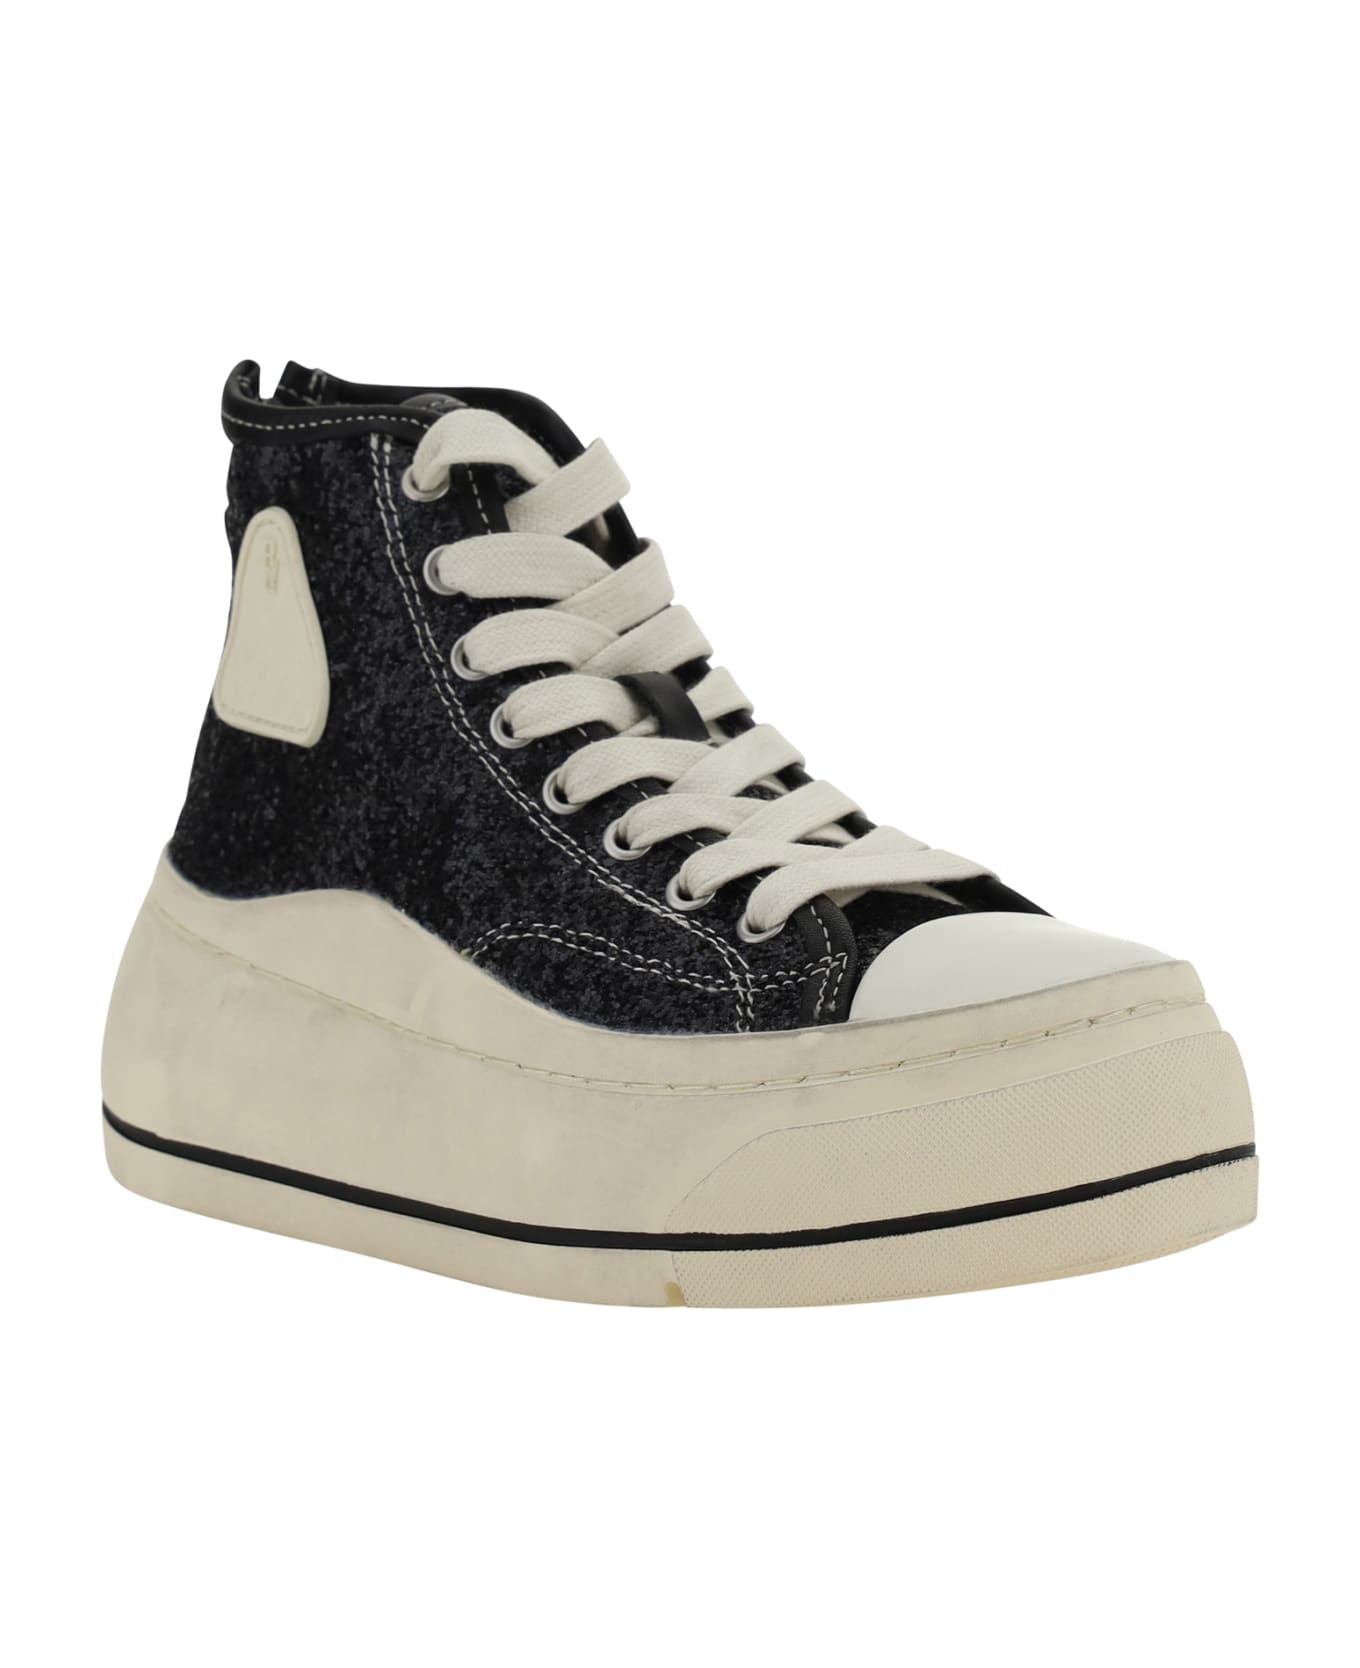 R13 Kurt Sneakers - Black Sparkle